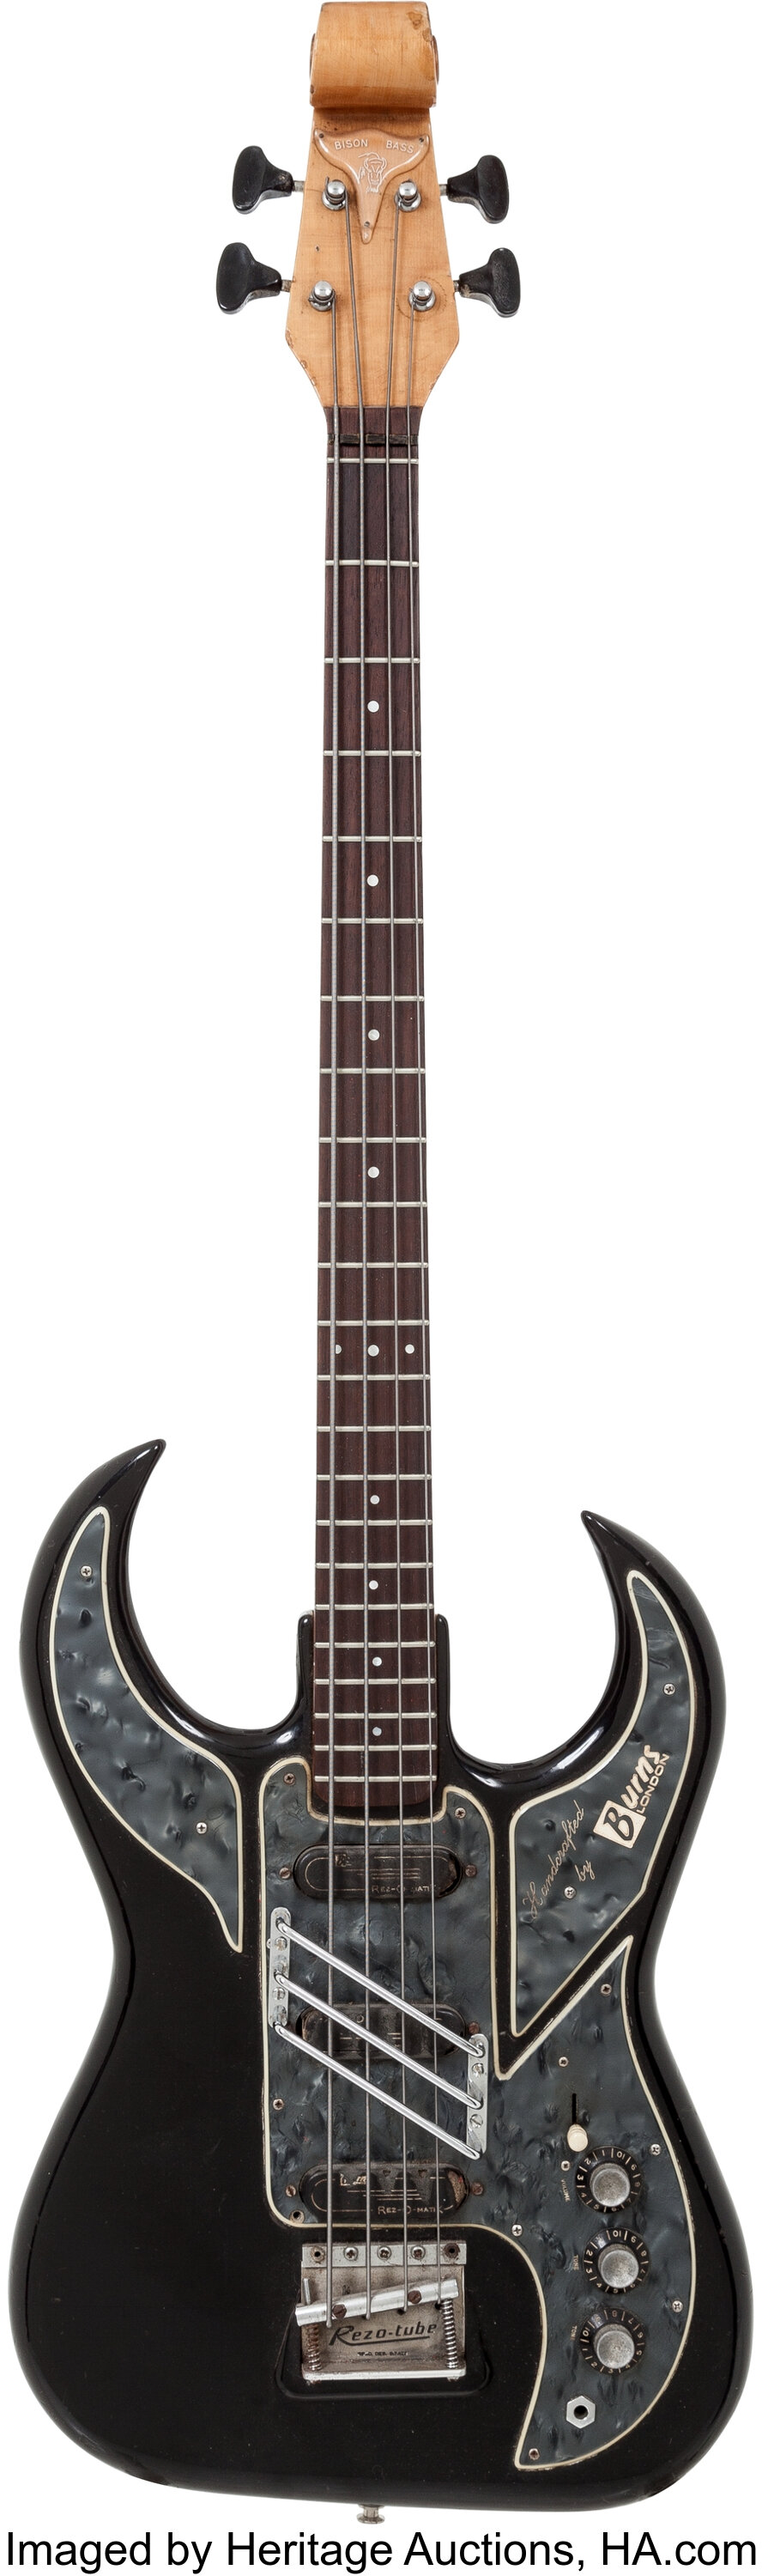 1965 Baldwin/Burns Bison Black Electric Bass Guitar, Serial